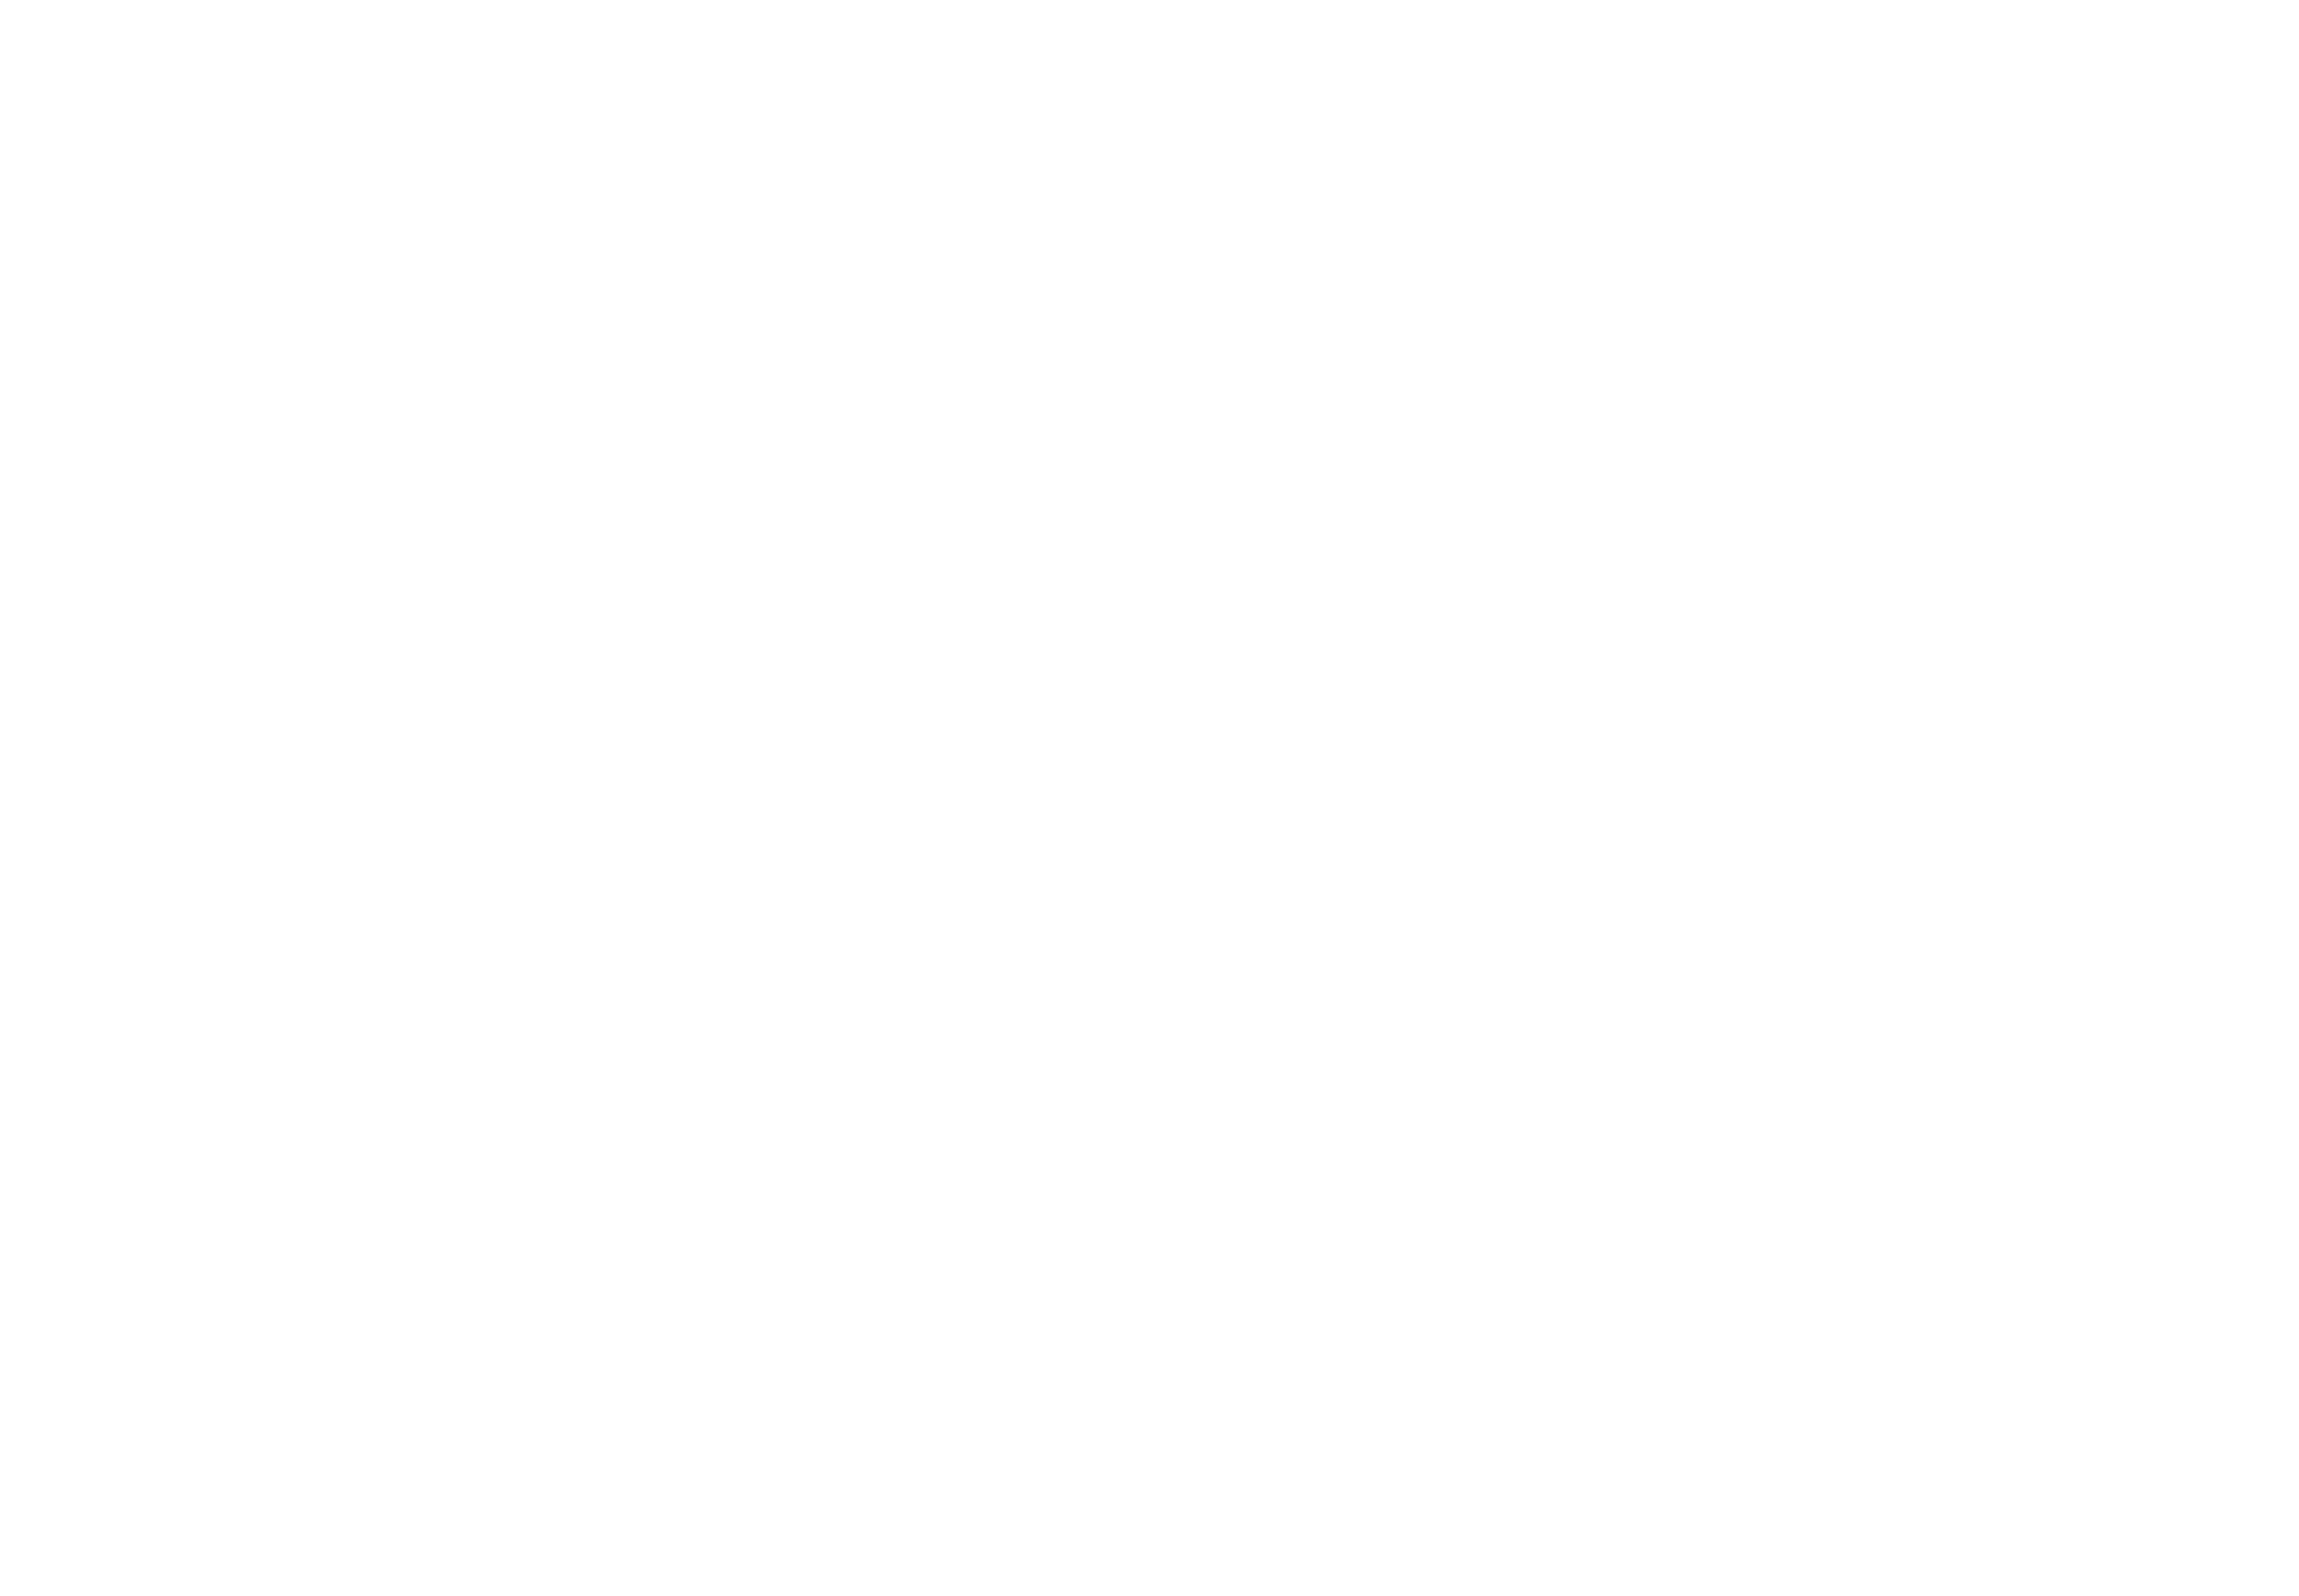 BeatCore